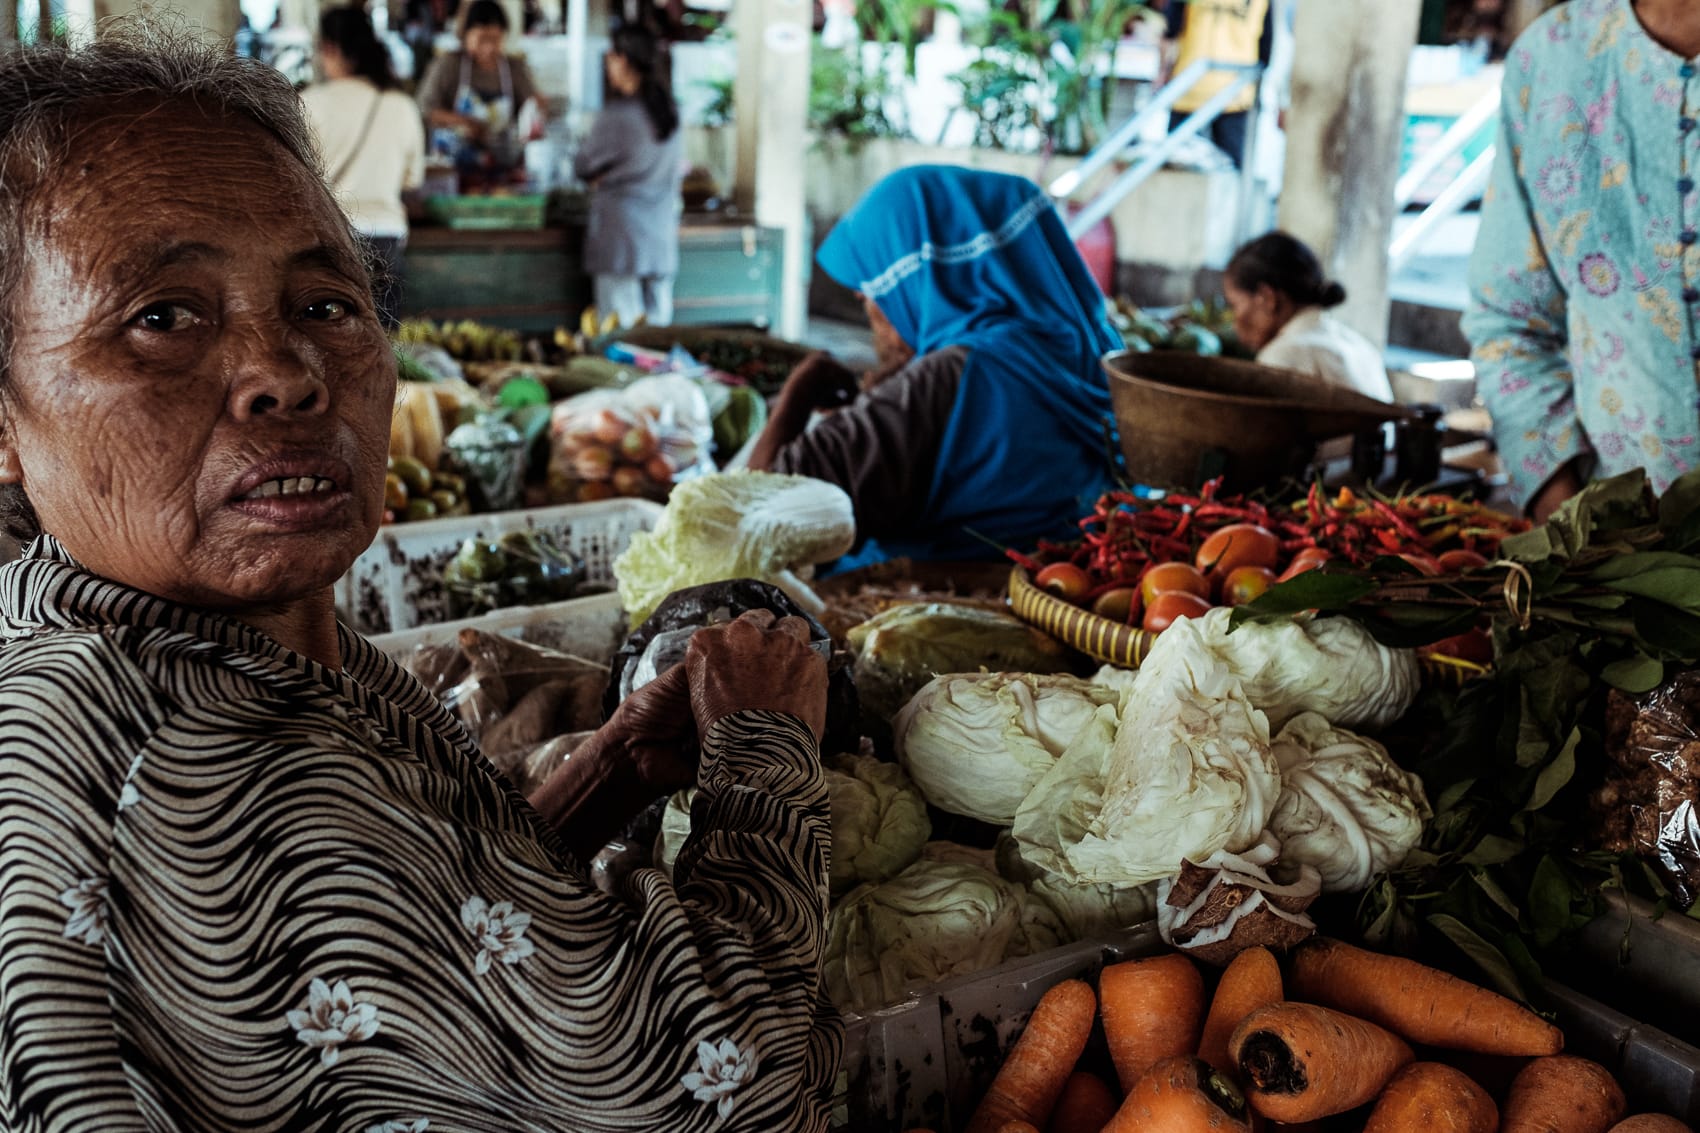 Indonesia 24 Yogyakarta At the Vegetables Market 2018